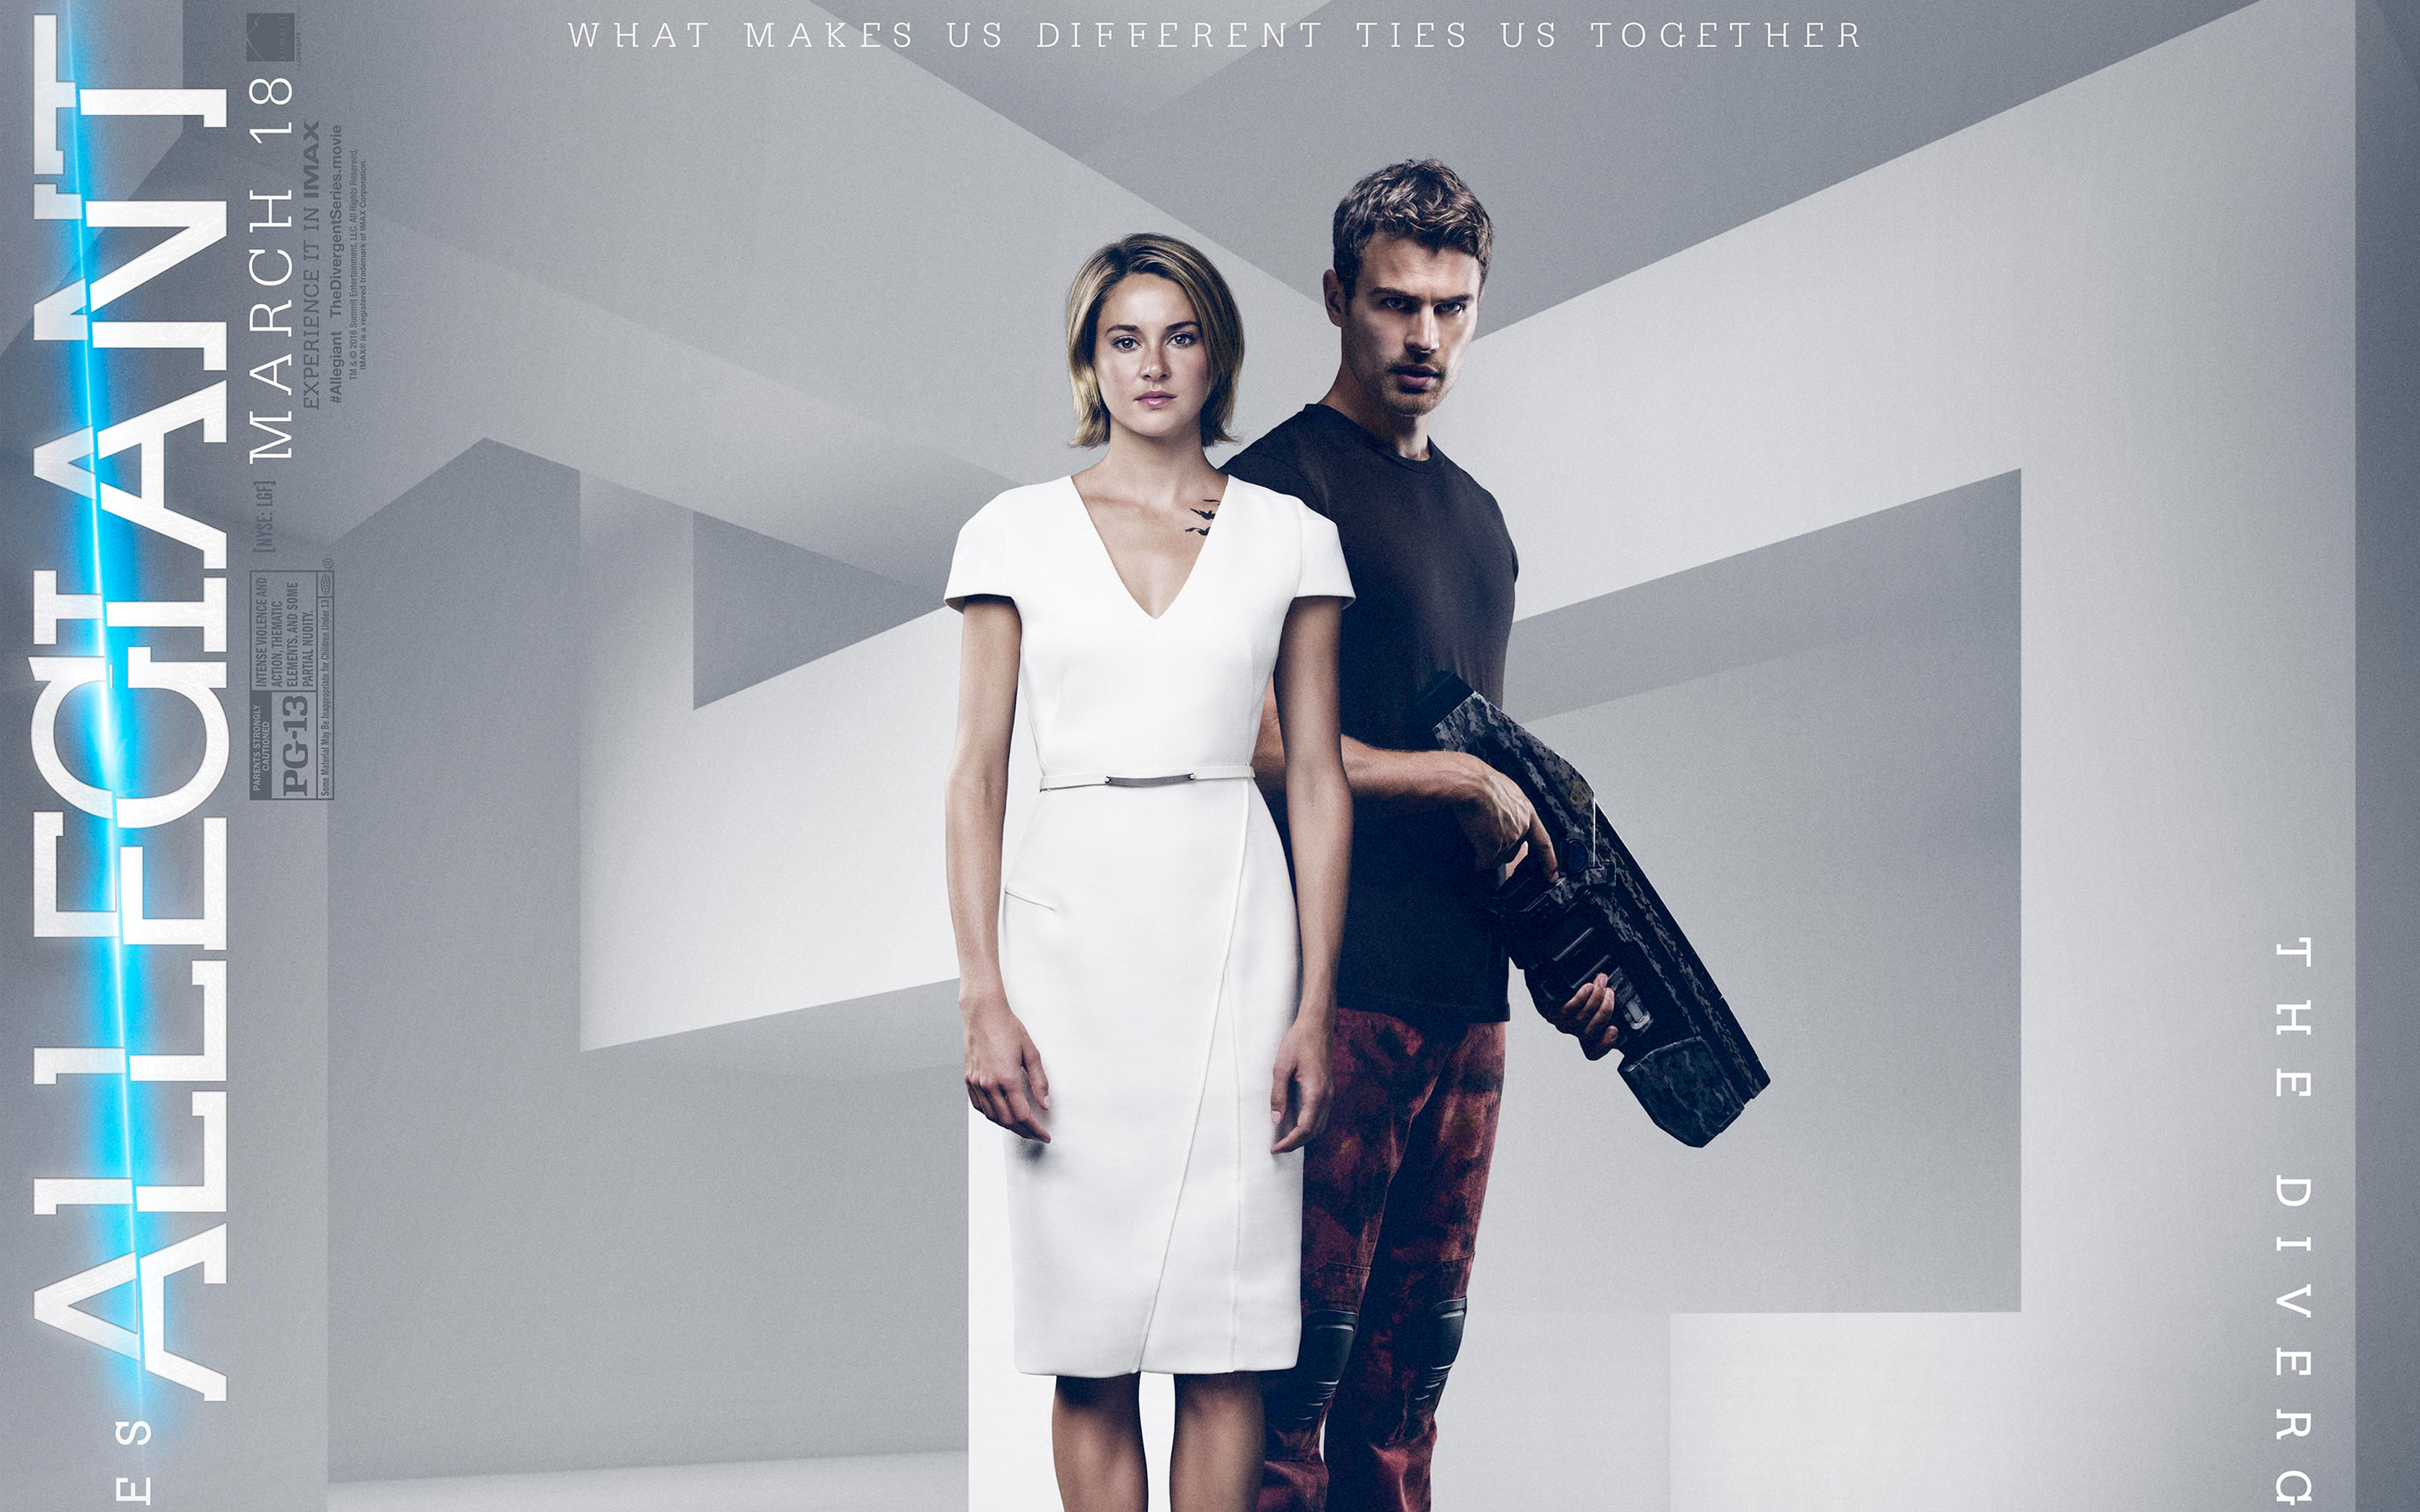 Movie Trailers Image The Divergent Series Allegiant Wallpaper HD